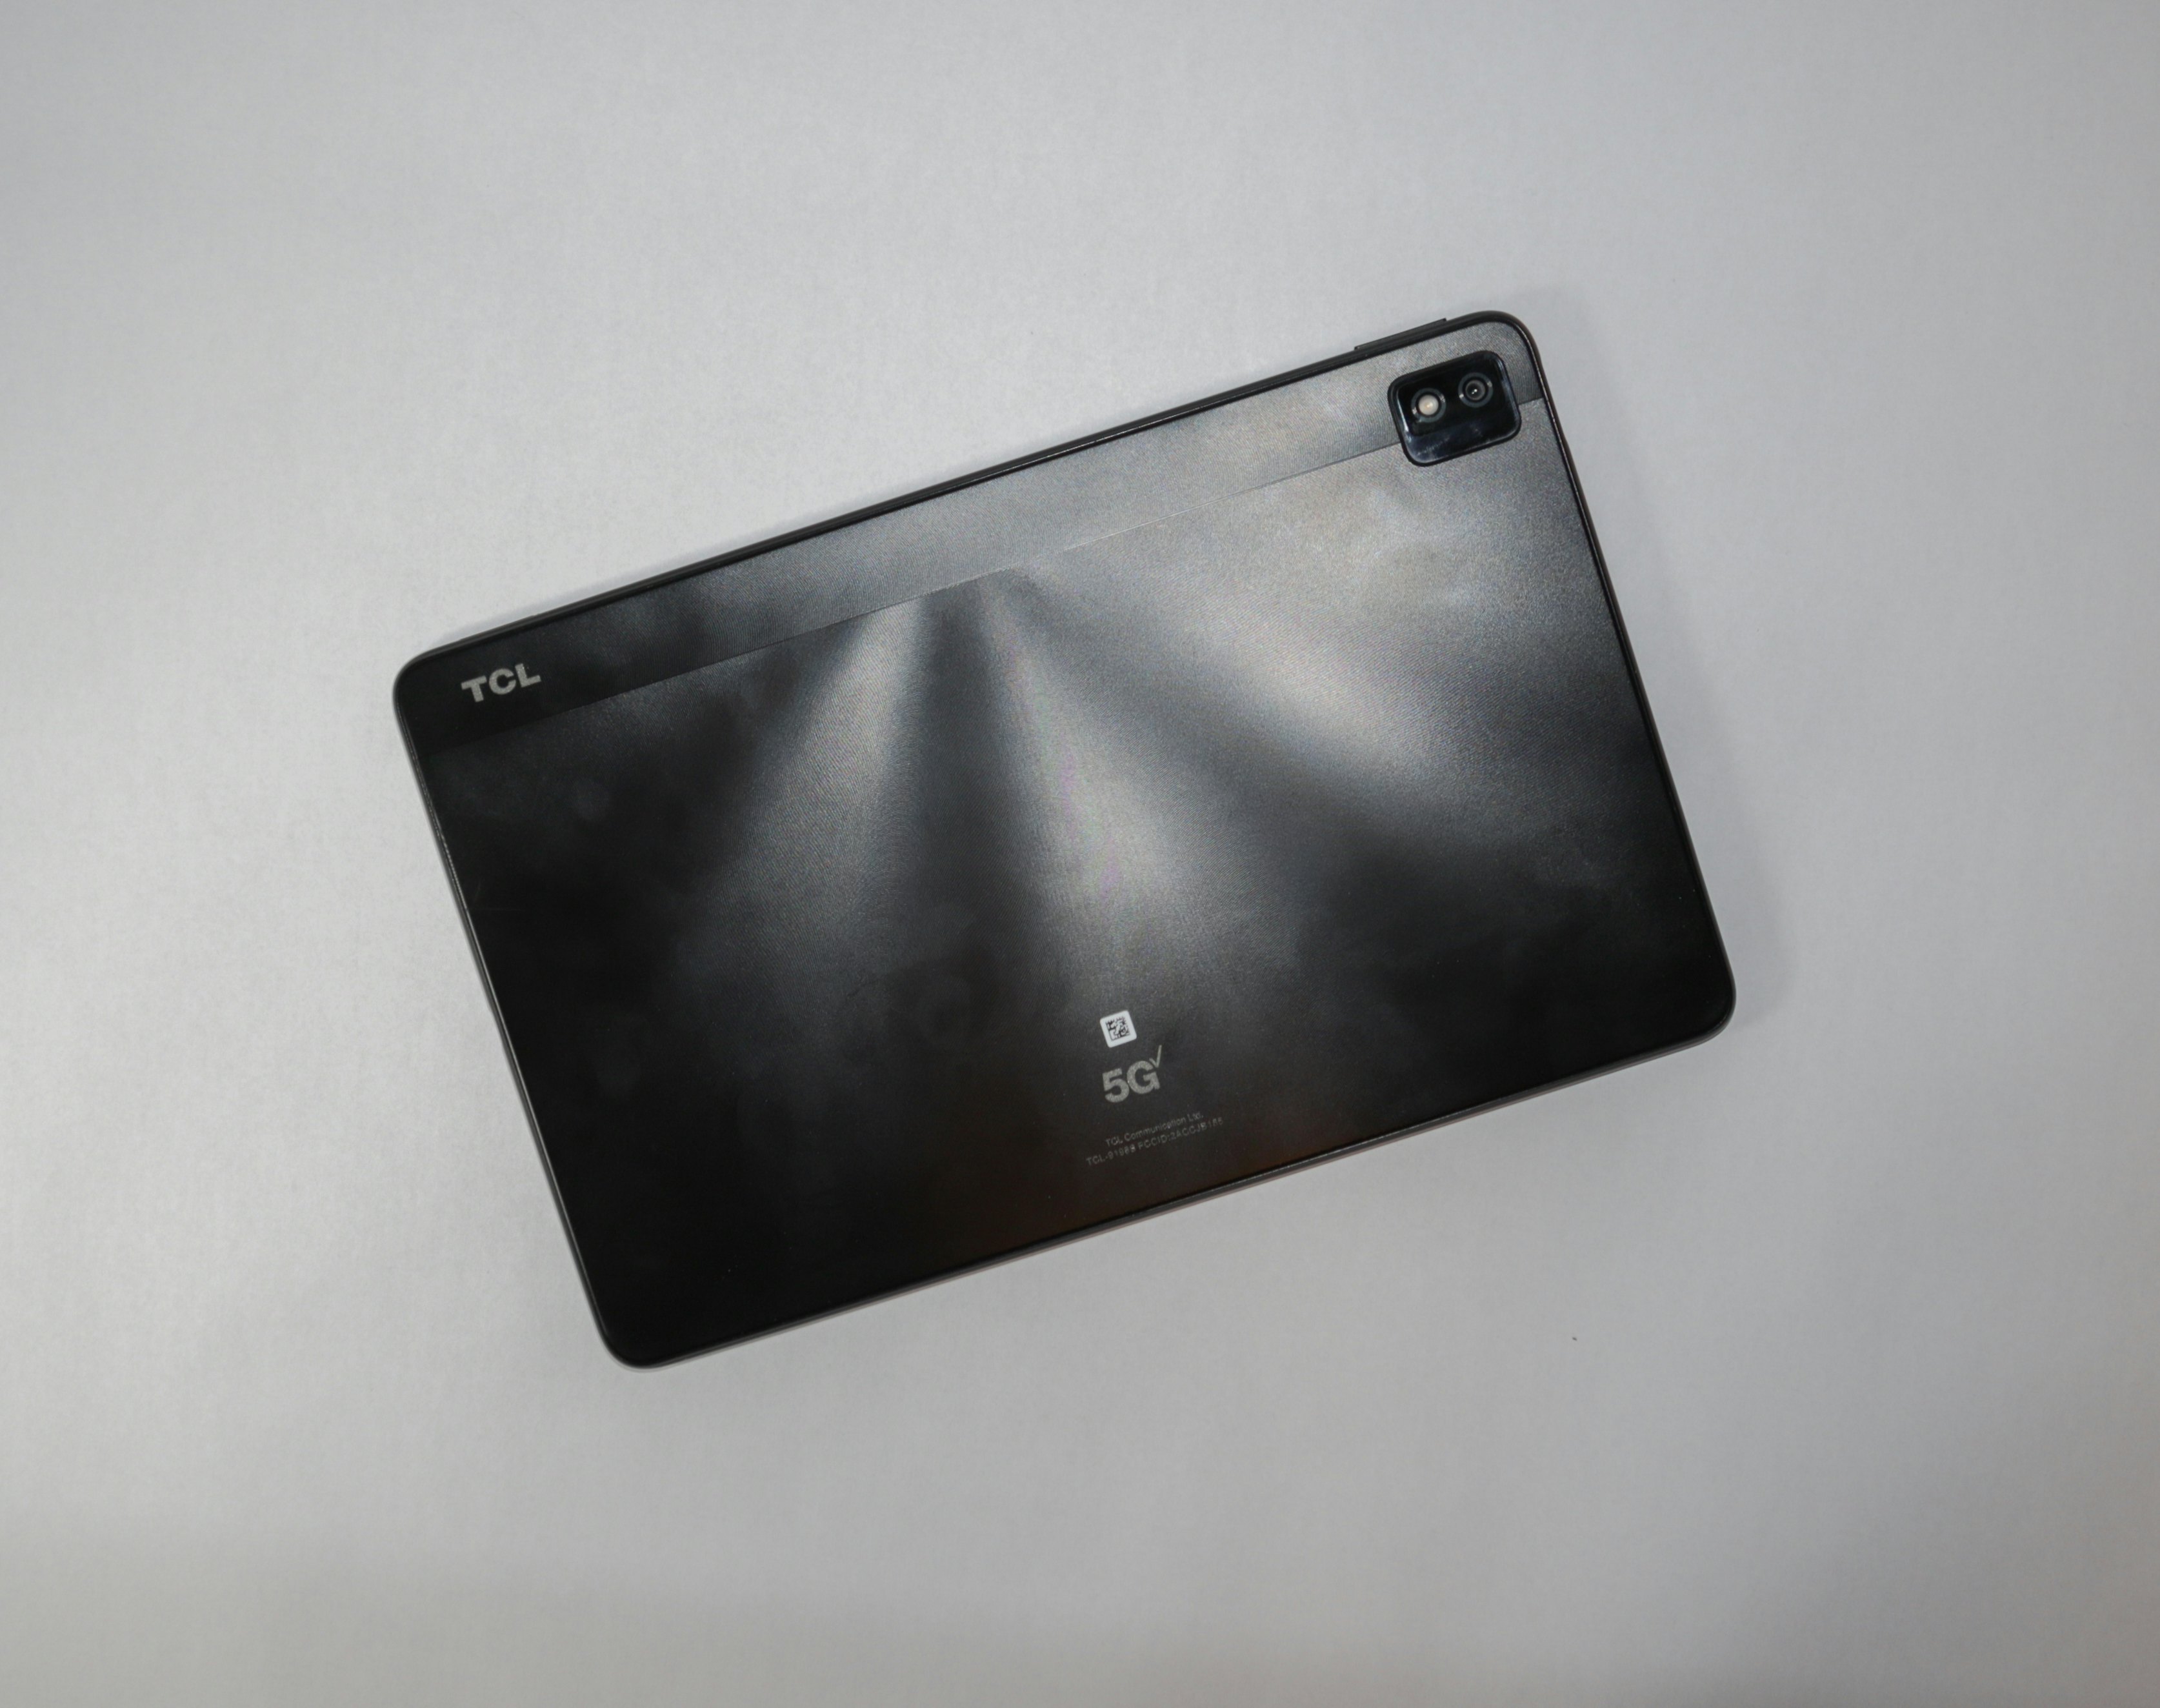 TCL Tablet (Renewed) (Tab Pro 5G (10.4 | Verizon))